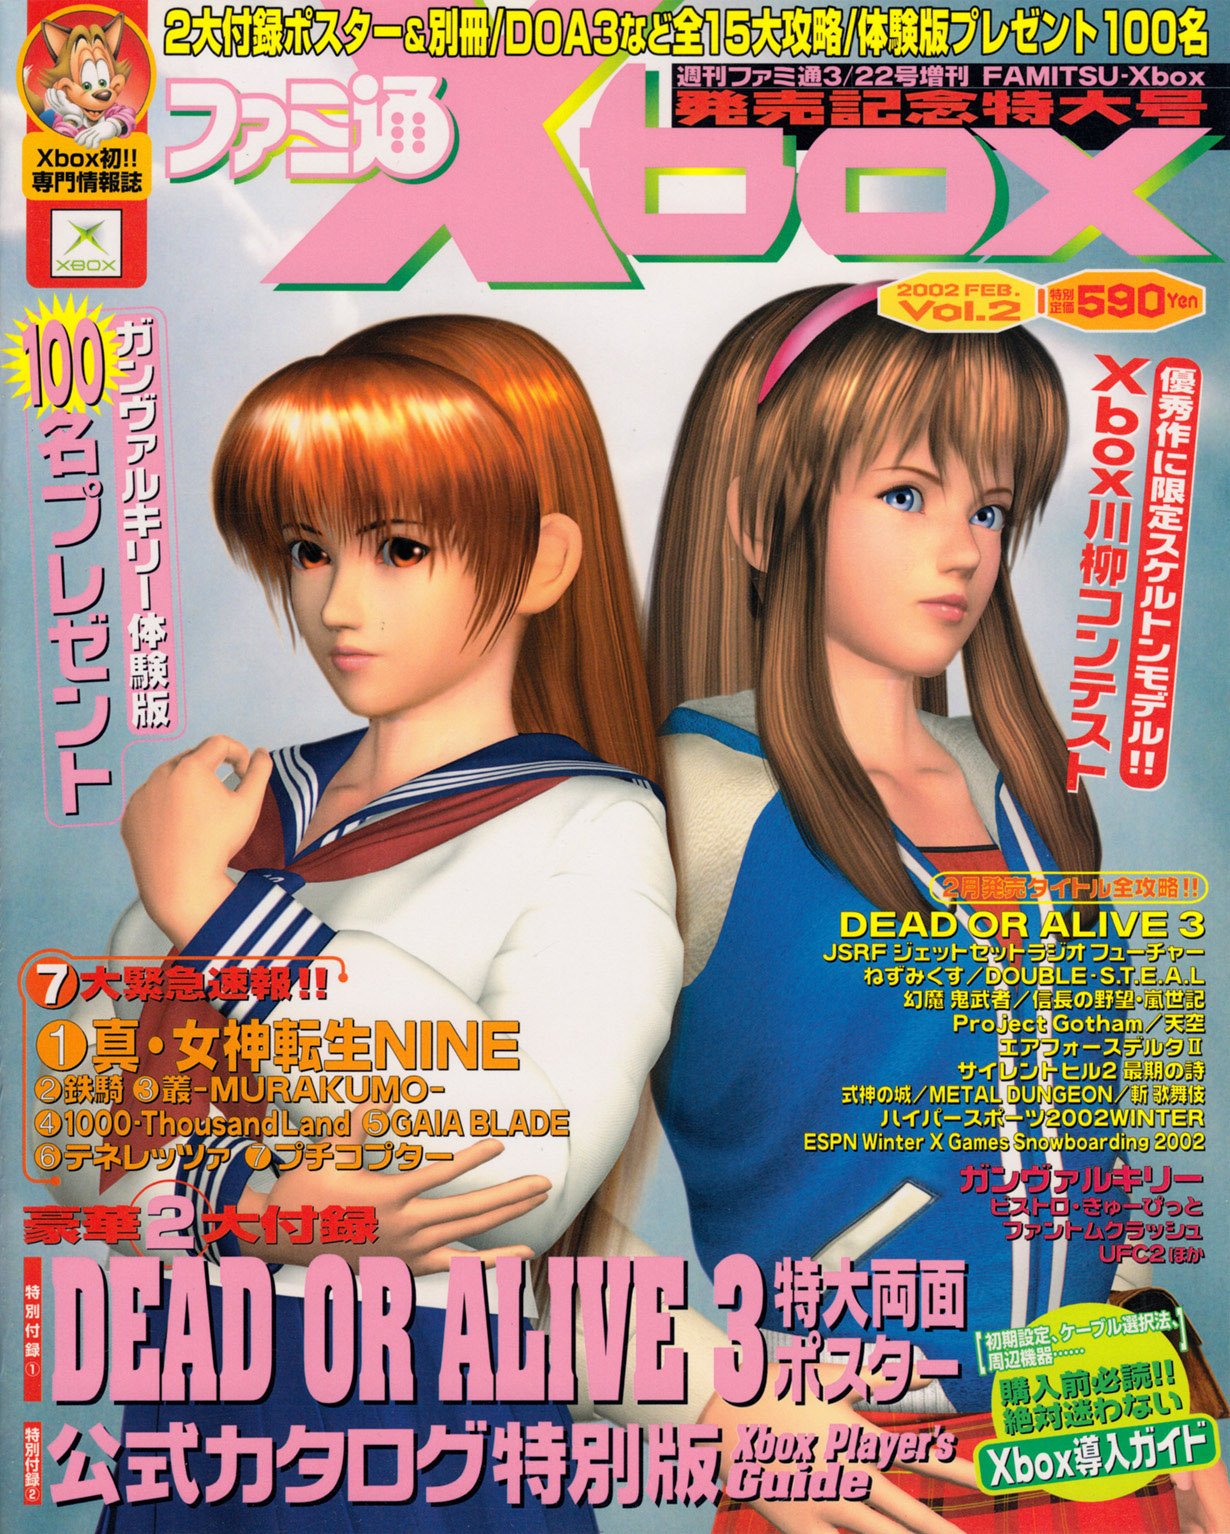 Famitsu Xbox Issue 002 (February 2002)